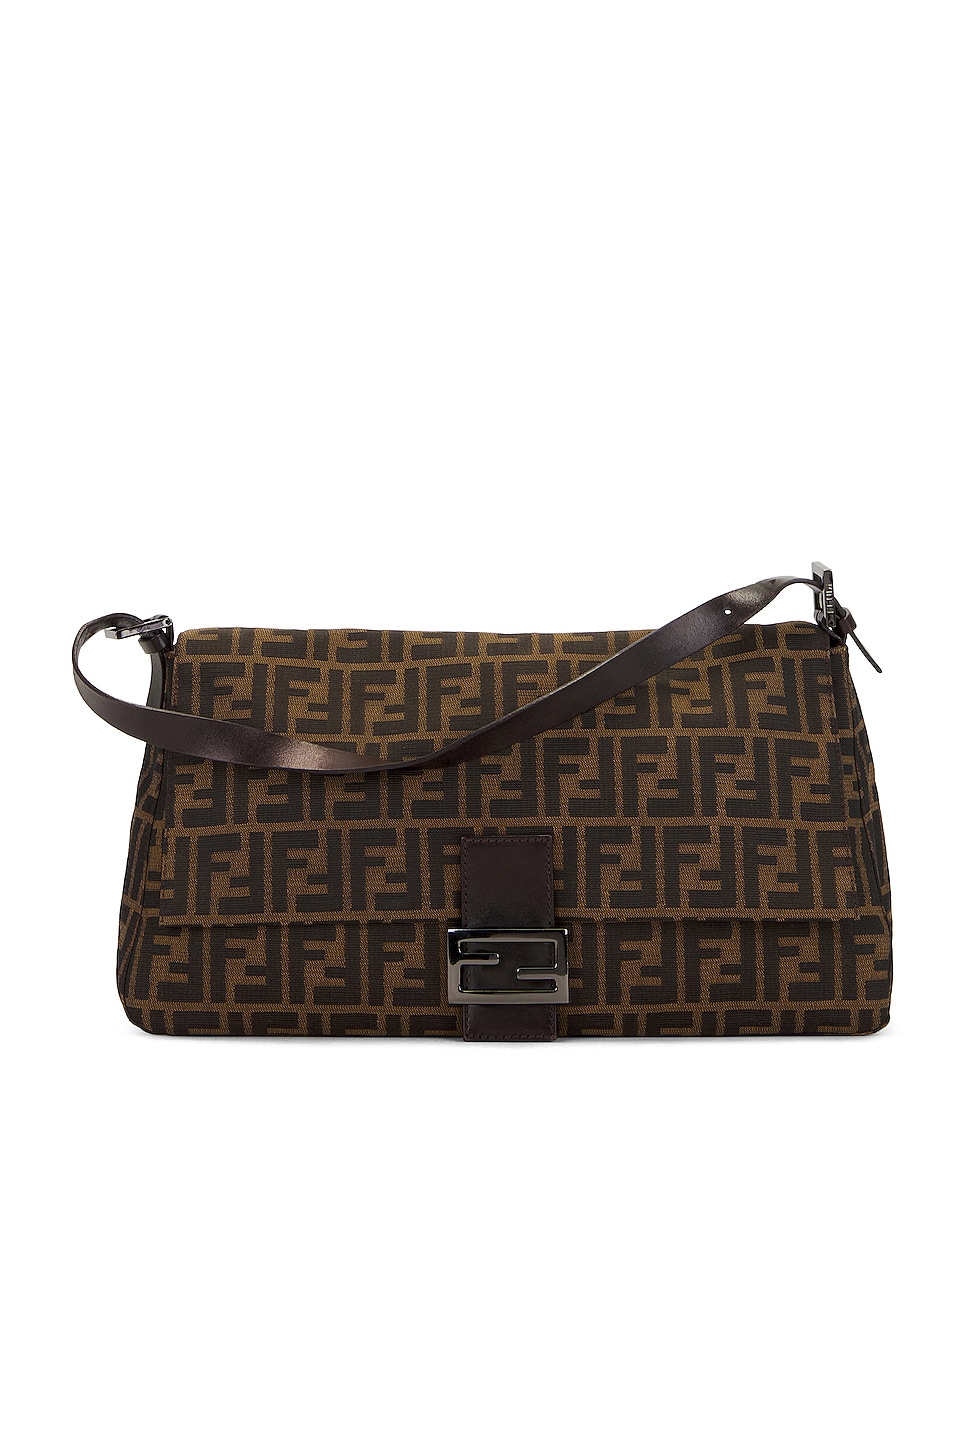 FWRD Renew Louis Vuitton Monogram Bandouliere 25 Teddy Speedy Bag